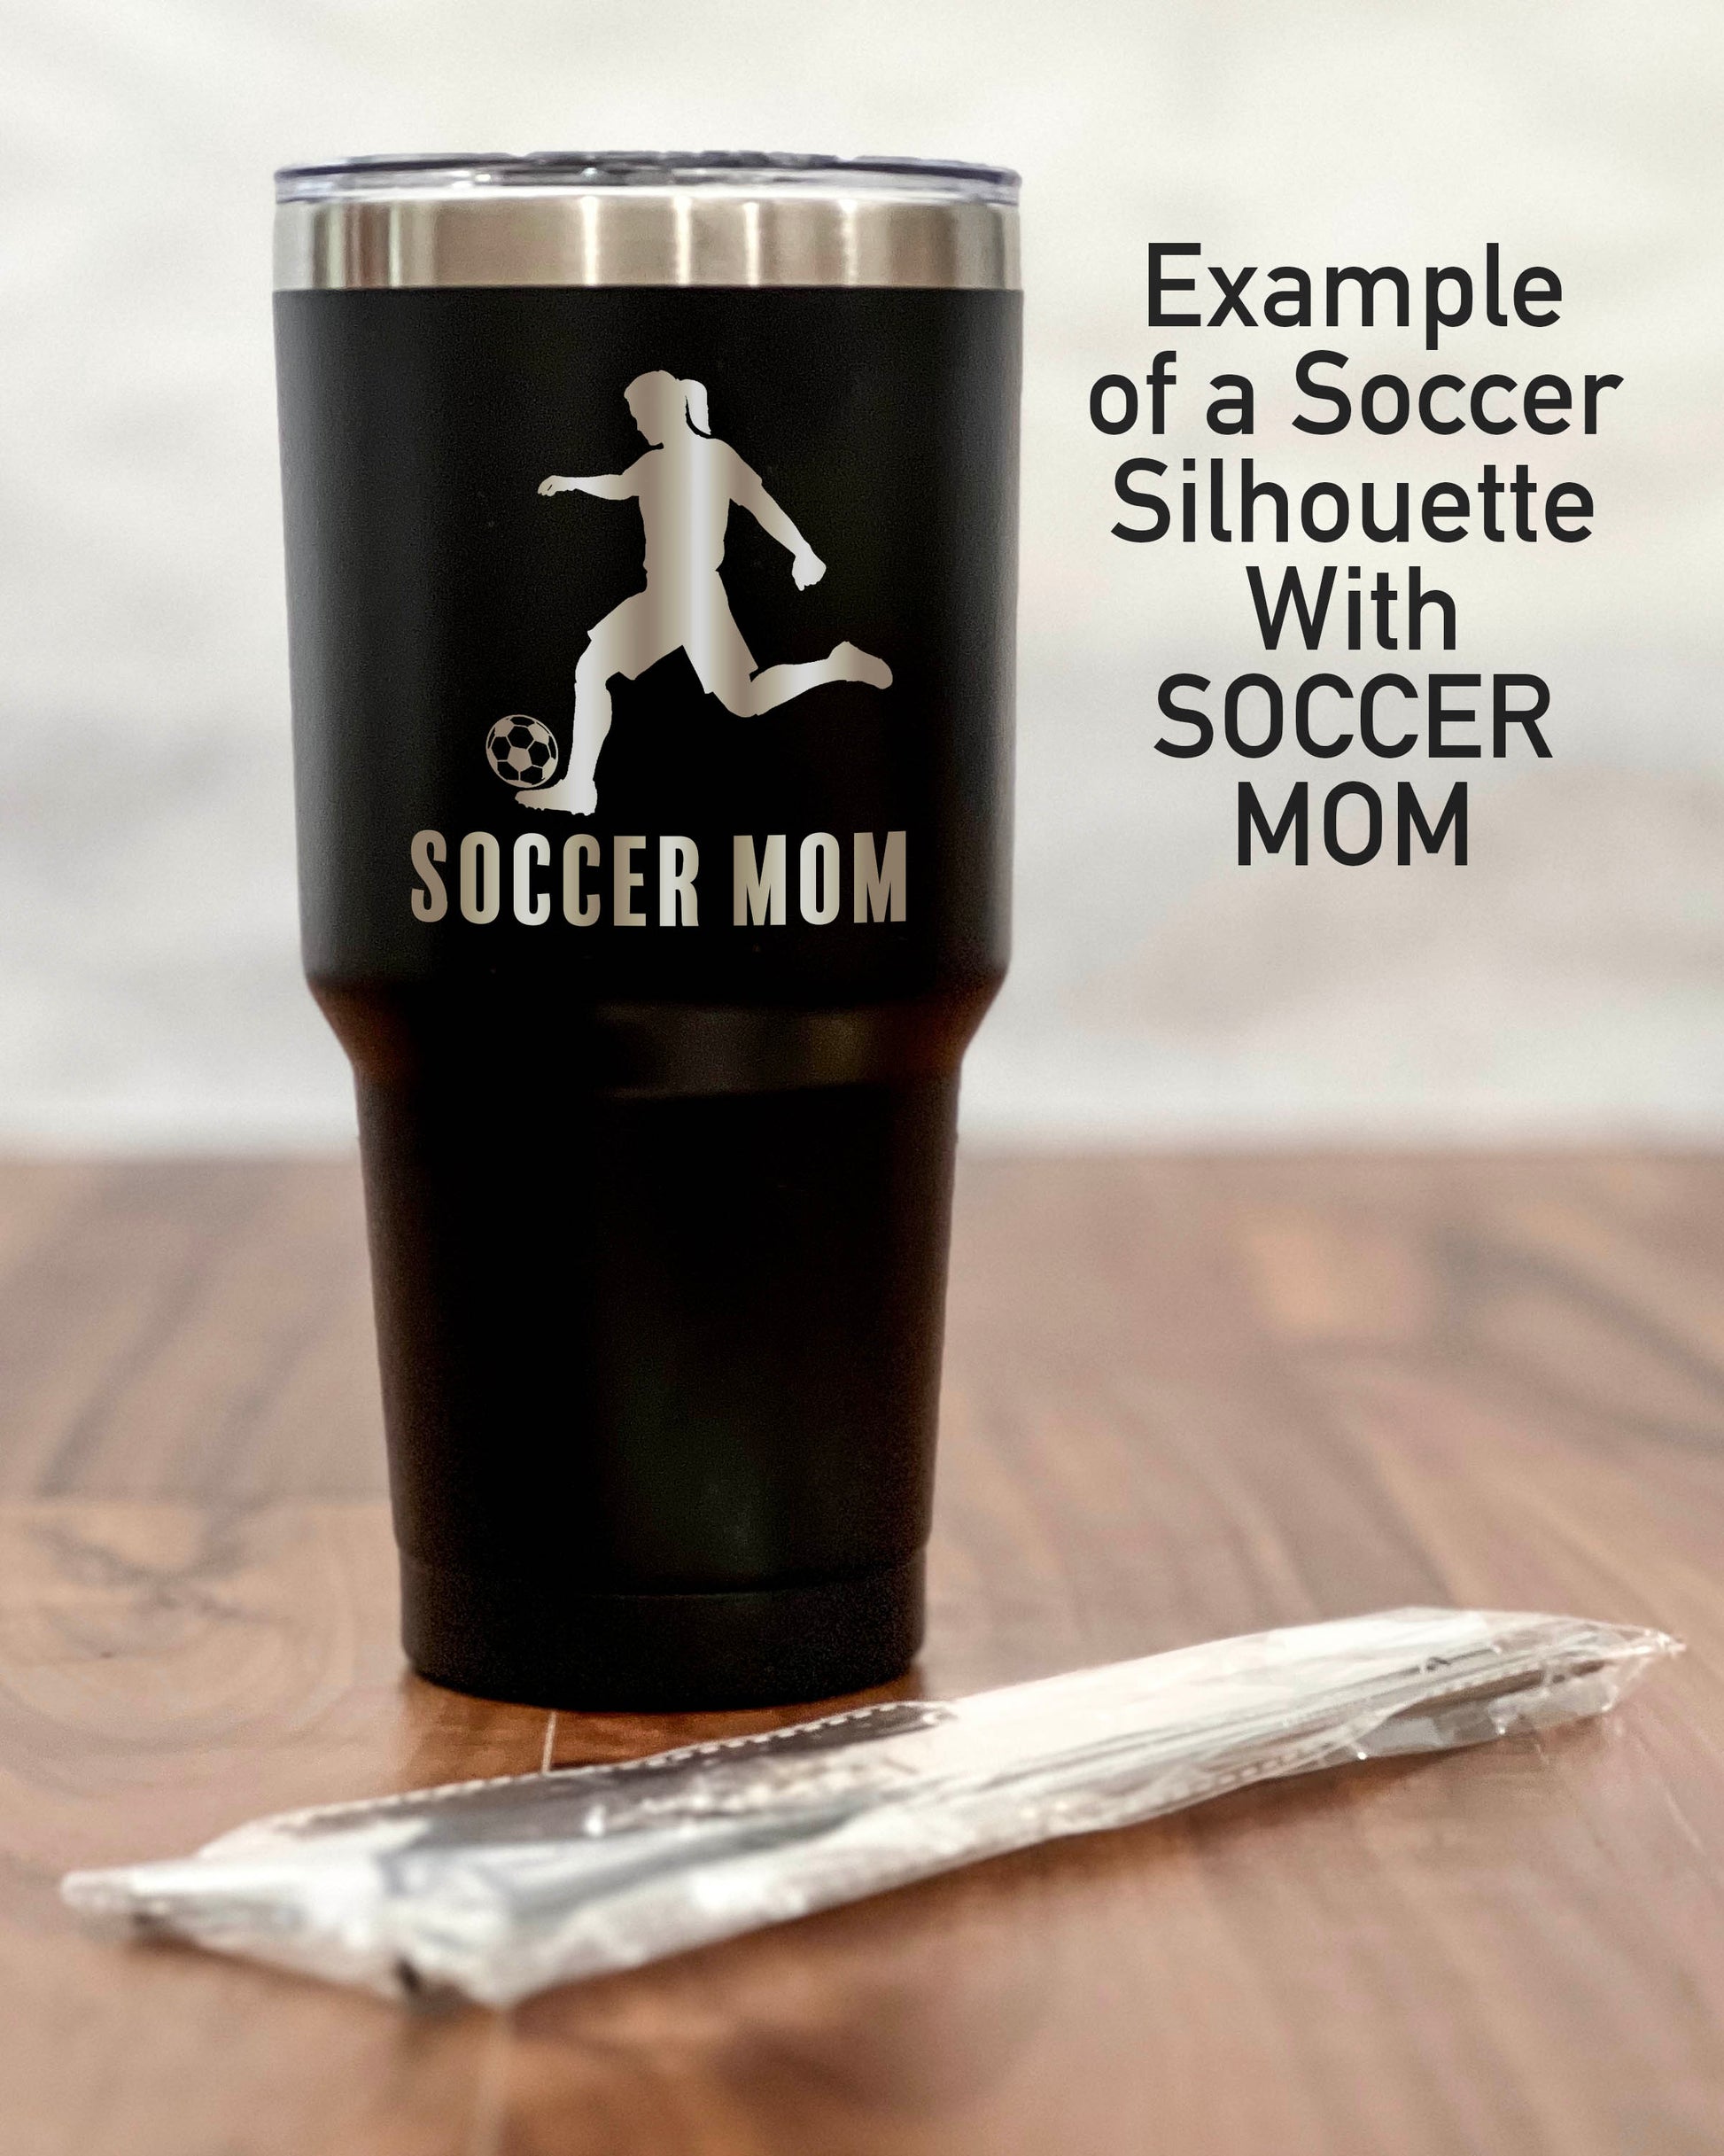 Somebody's Loud Mouth Soccer Mom 20 oz Tumbler